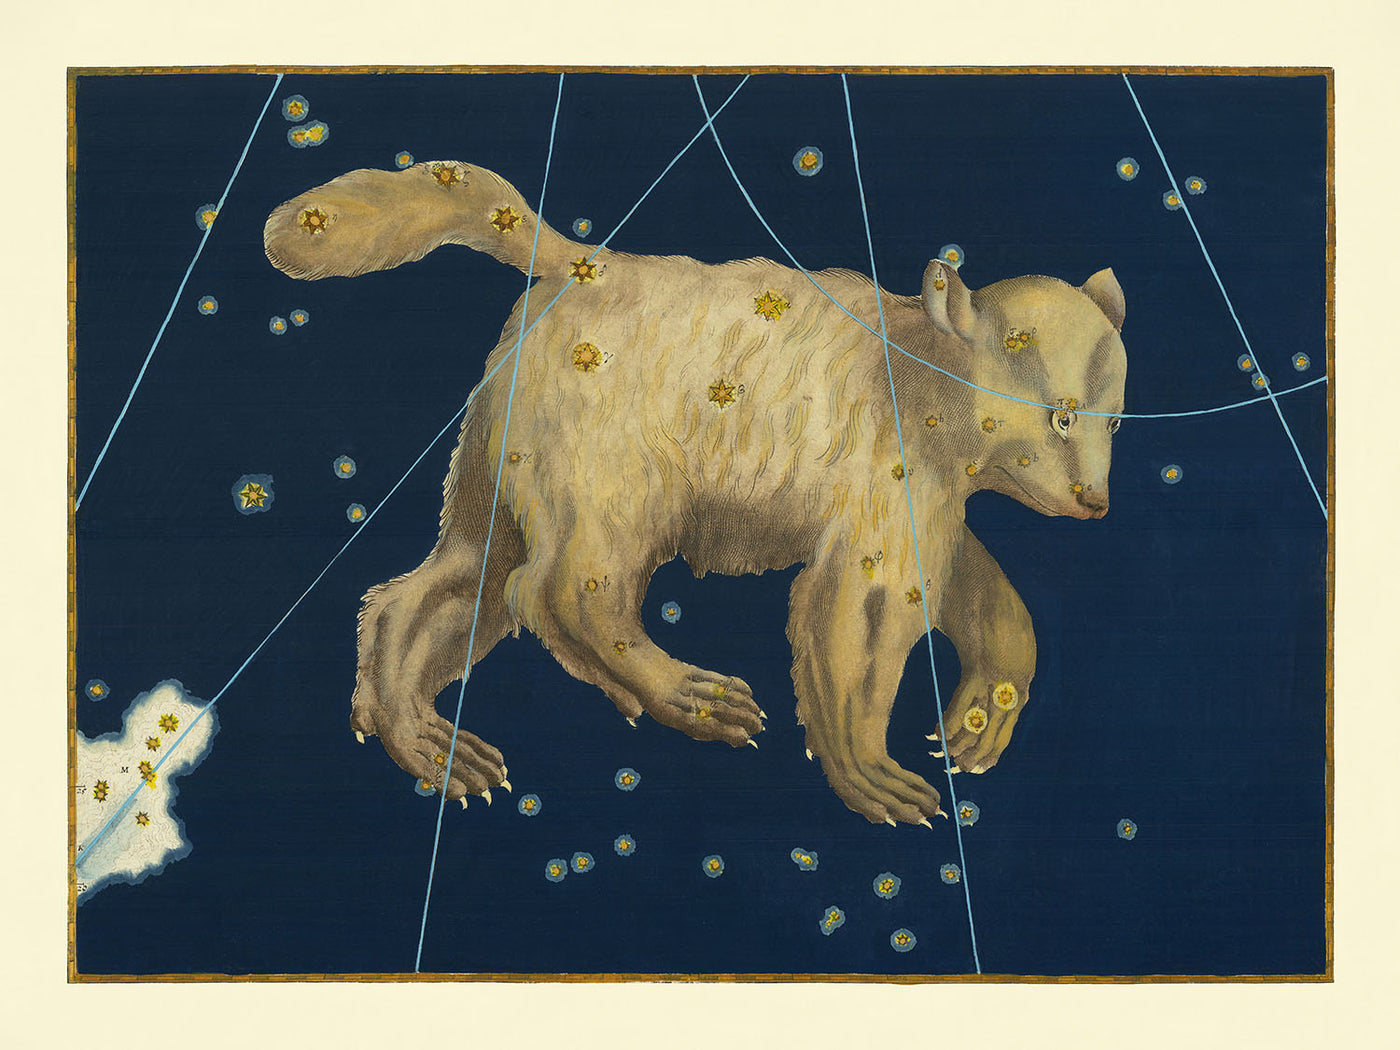 Old Star Map of Ursa Major (Great Bear) by Johann Bayer, 1603 - Celestial Constellation Chart